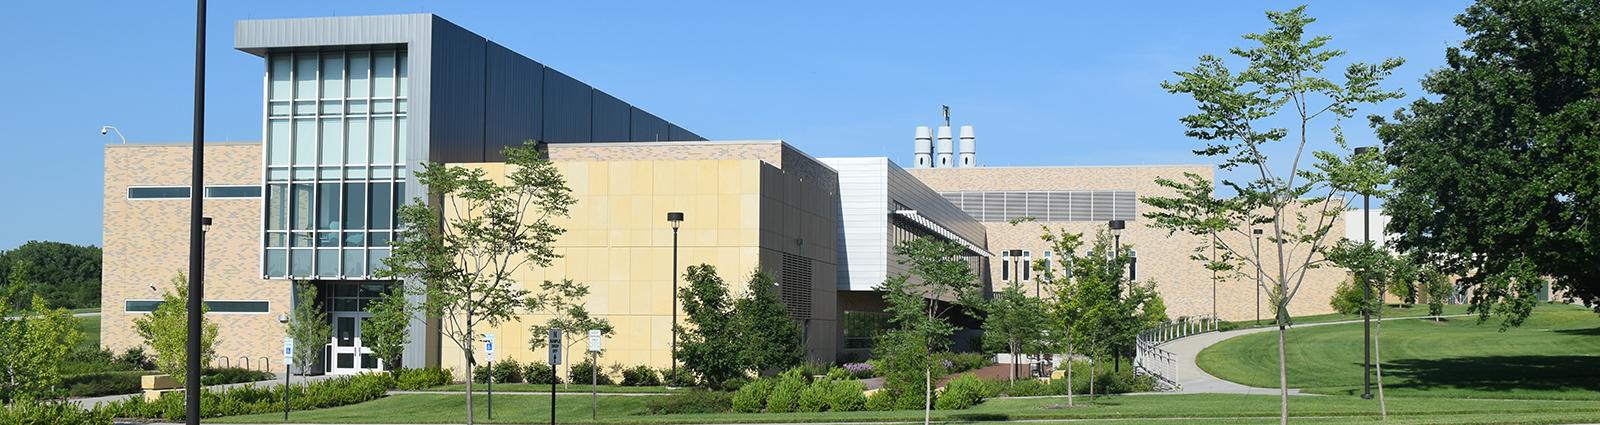 Exterior of the Nebraska Veterinary Diagnostic Center at the University of Nebraska-Lincoln.